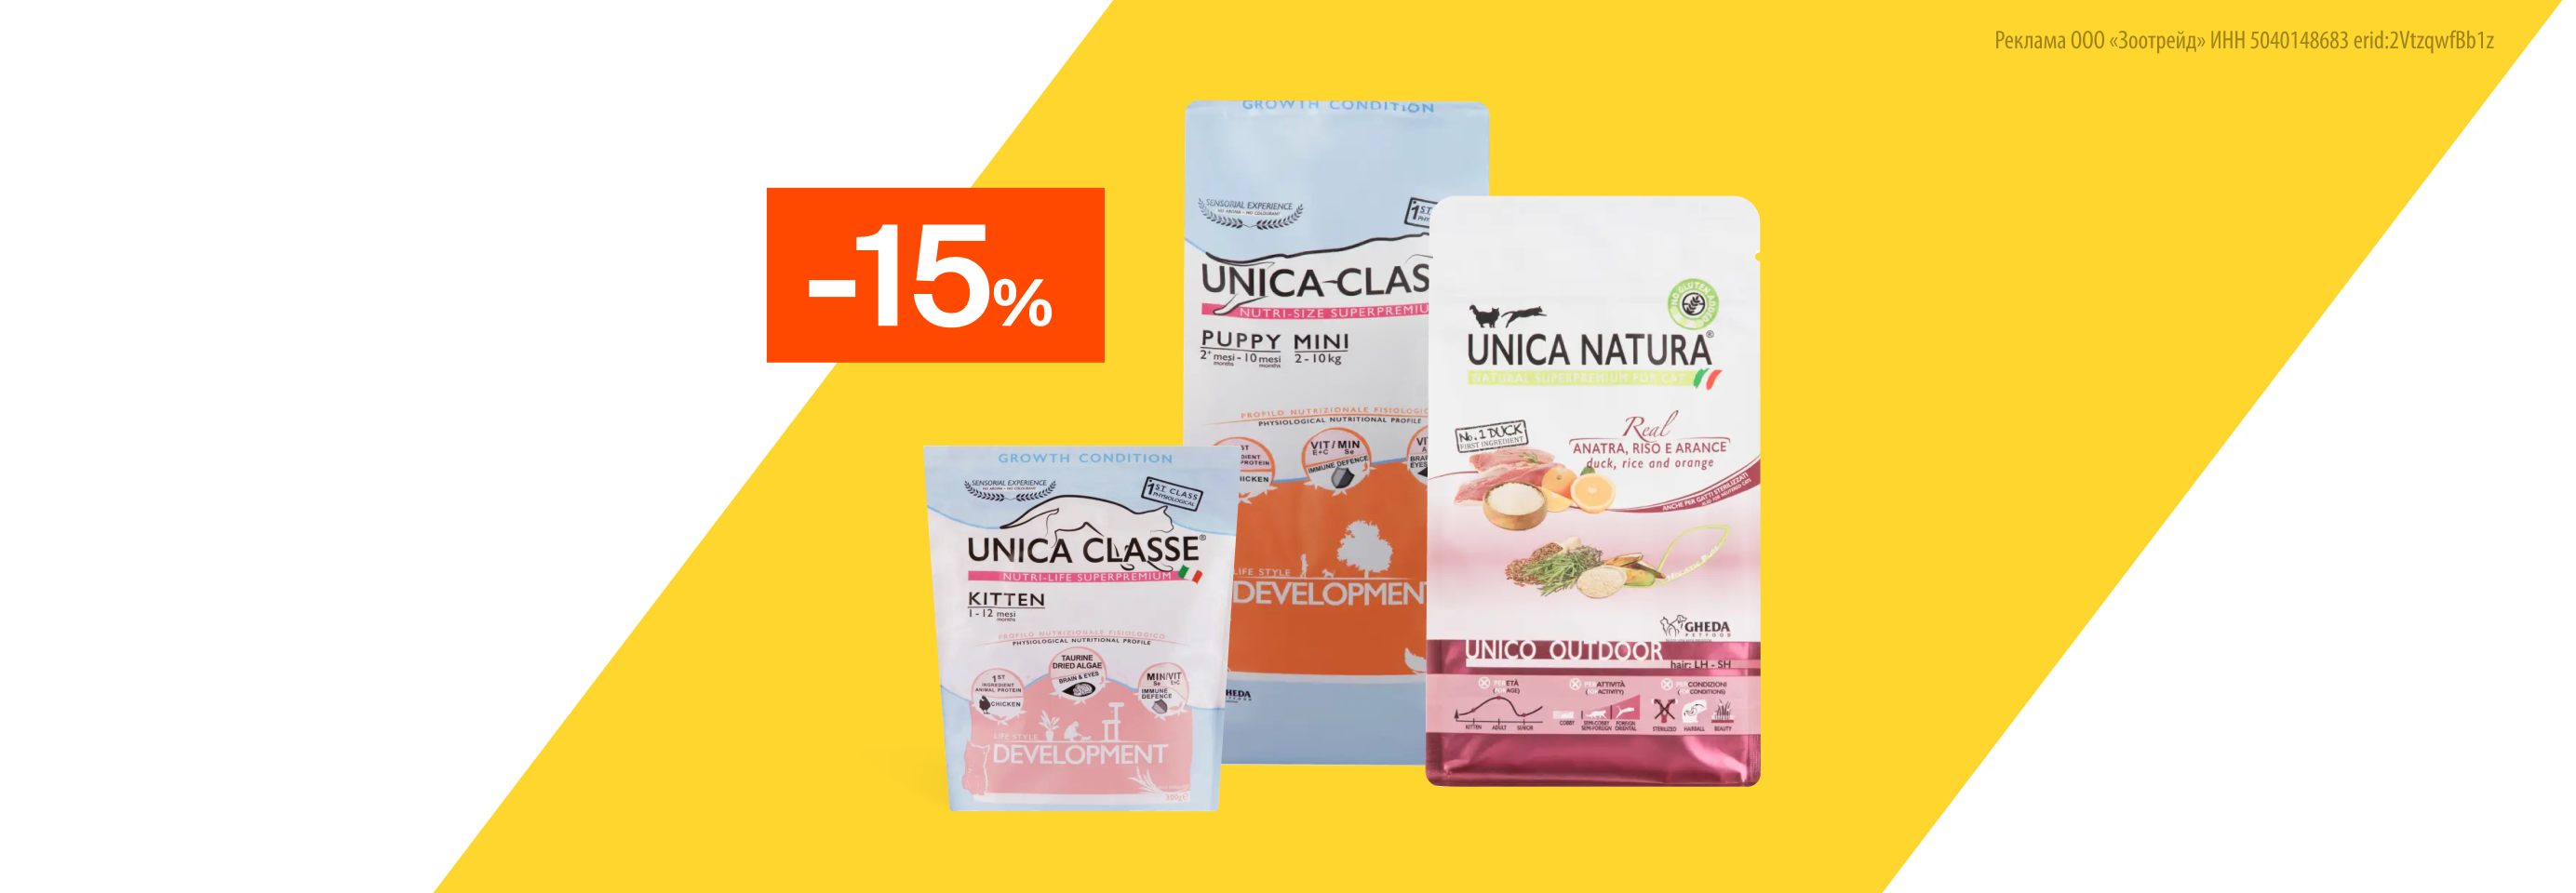 Unica: -15% на сухой корм для кошек и собак